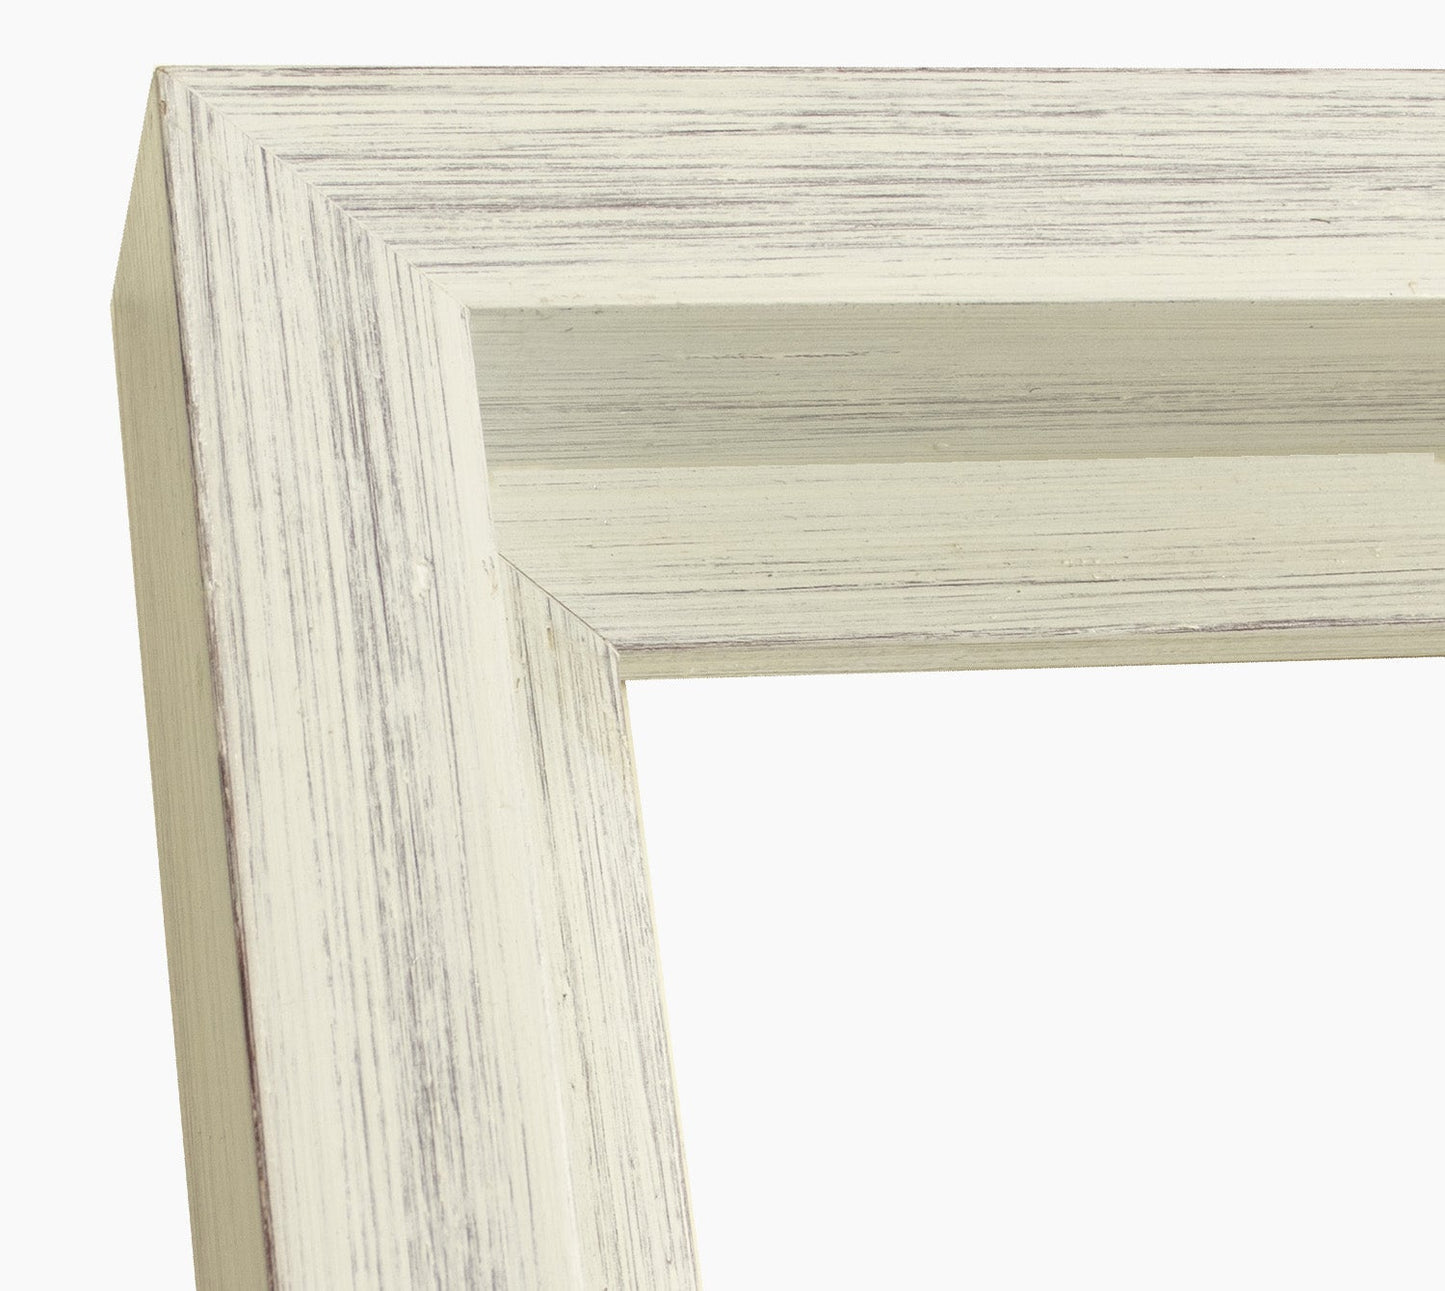 605.920 cadre en bois blanc fond marron mesure de profil 60x55 mm Lombarda cornici S.n.c.